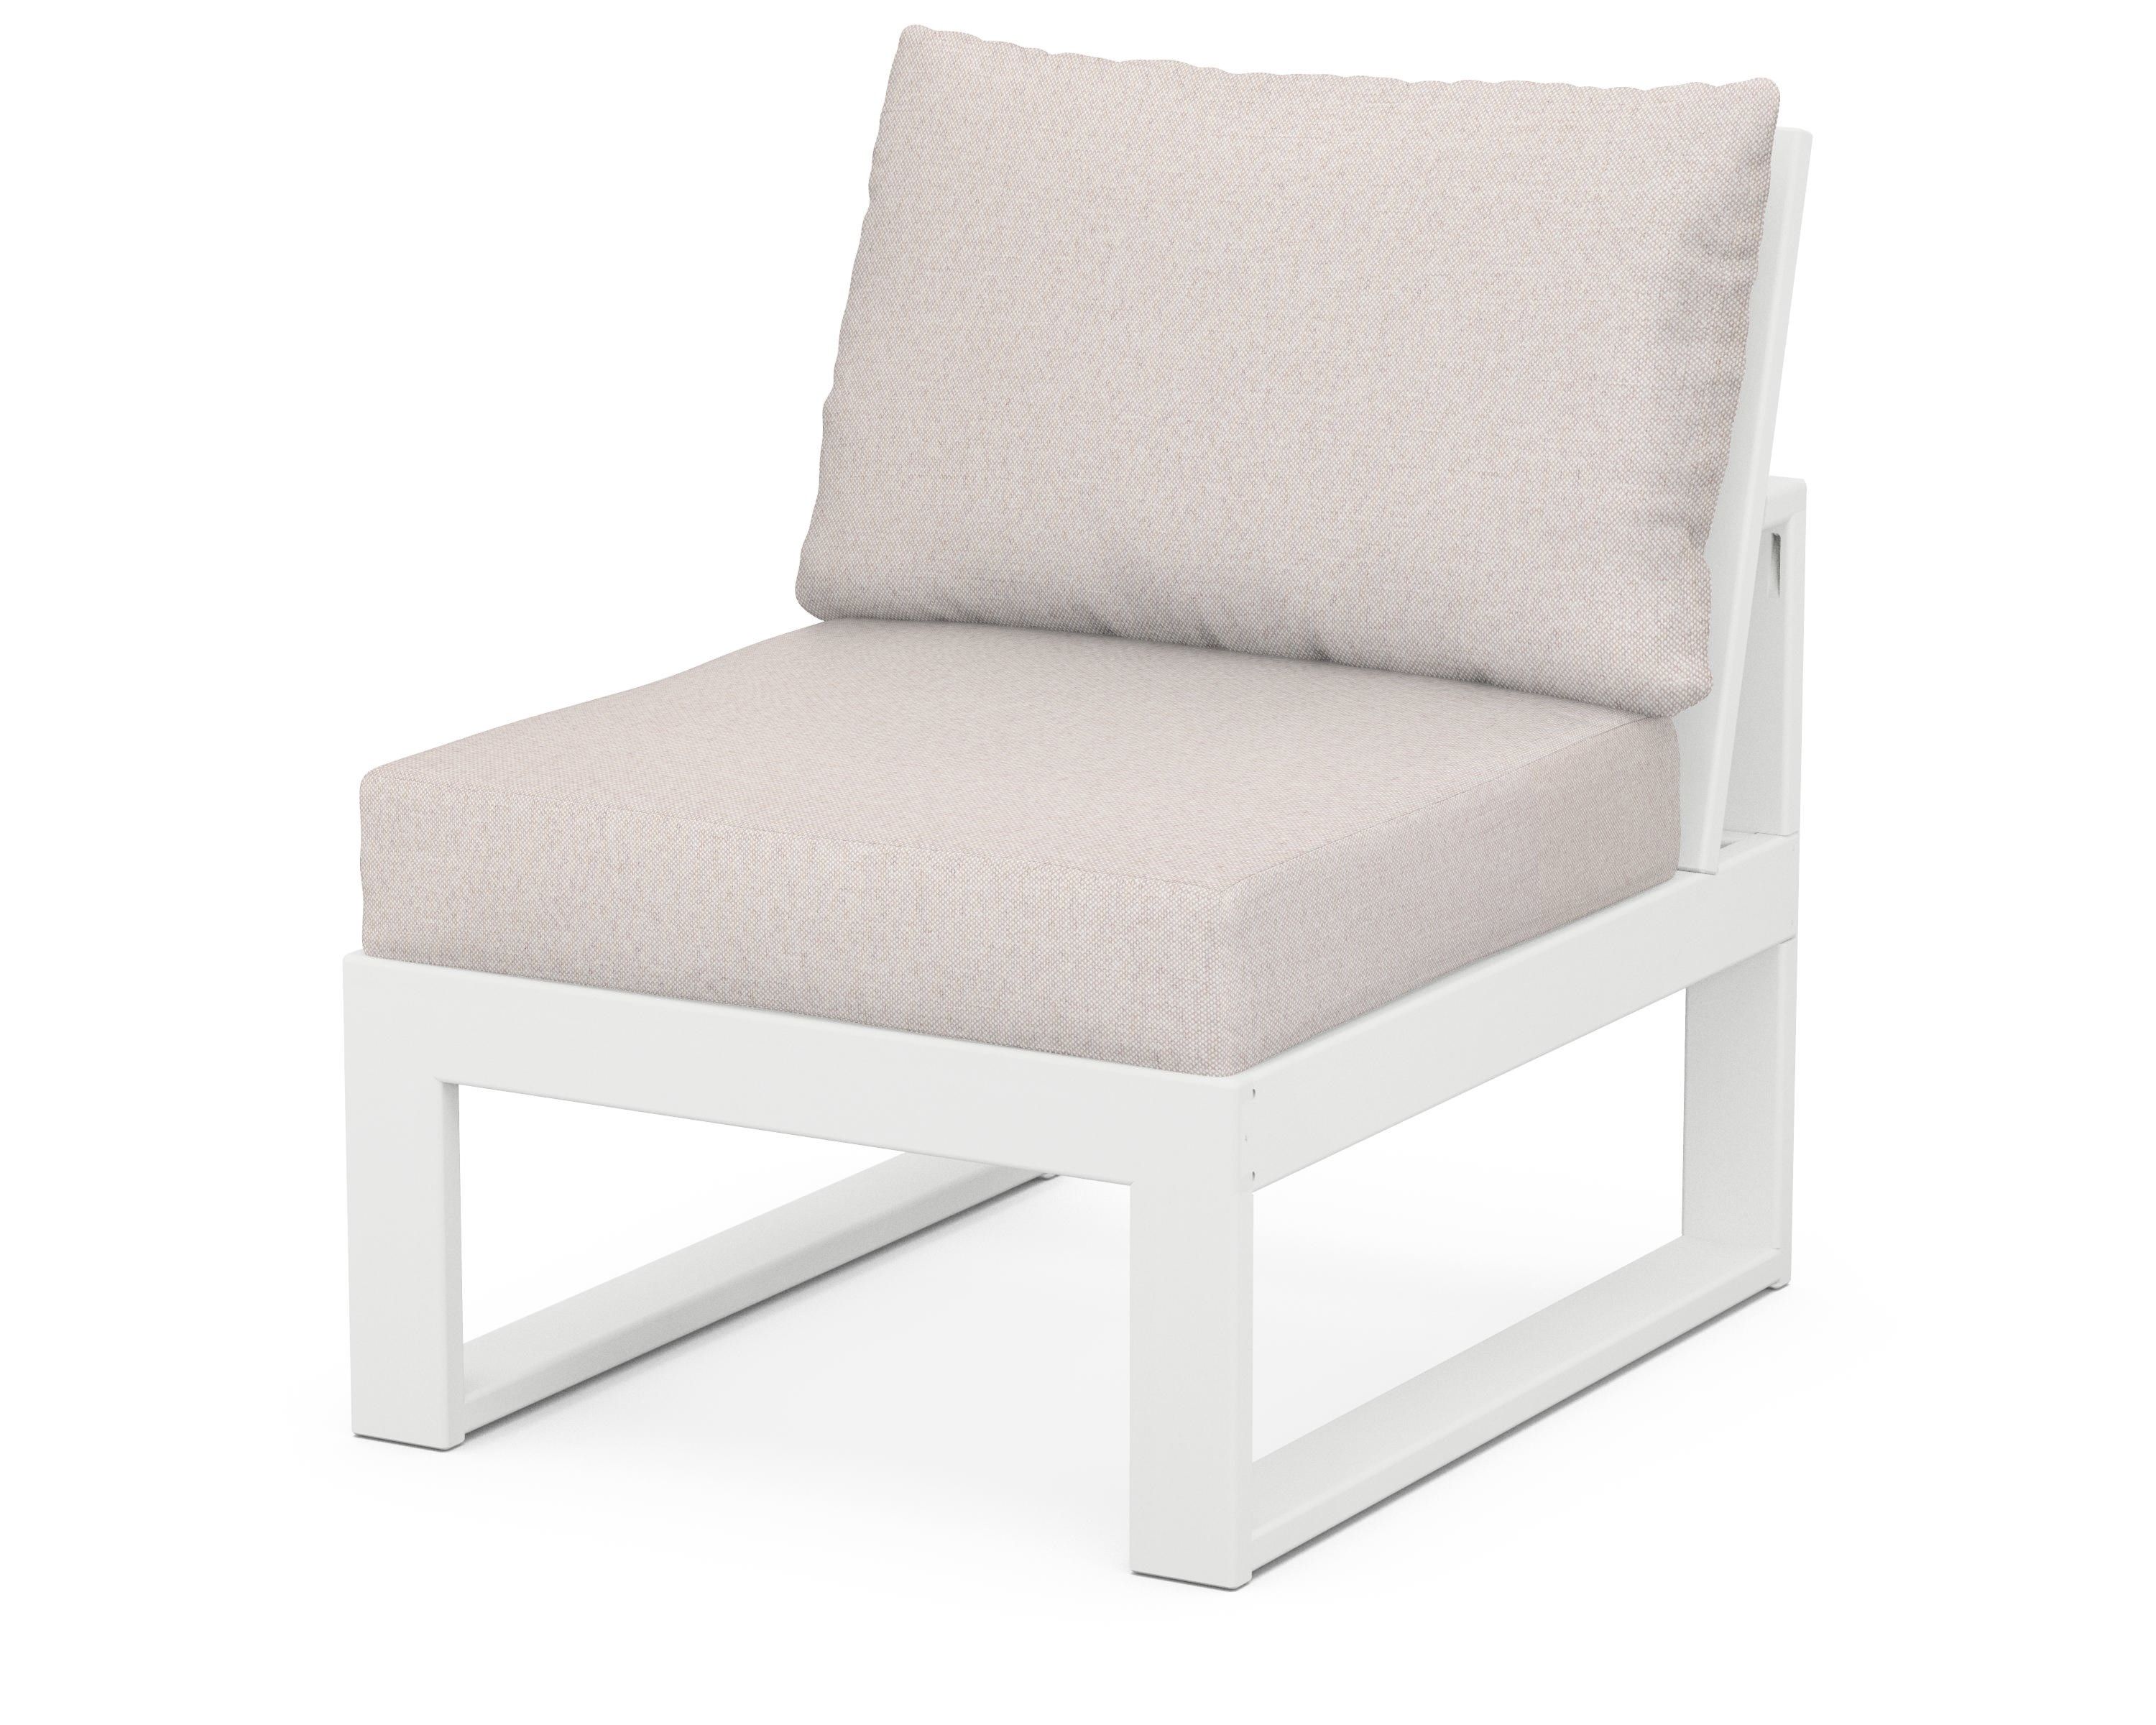 Trex Outdoor Furniture Modular Armless Chair